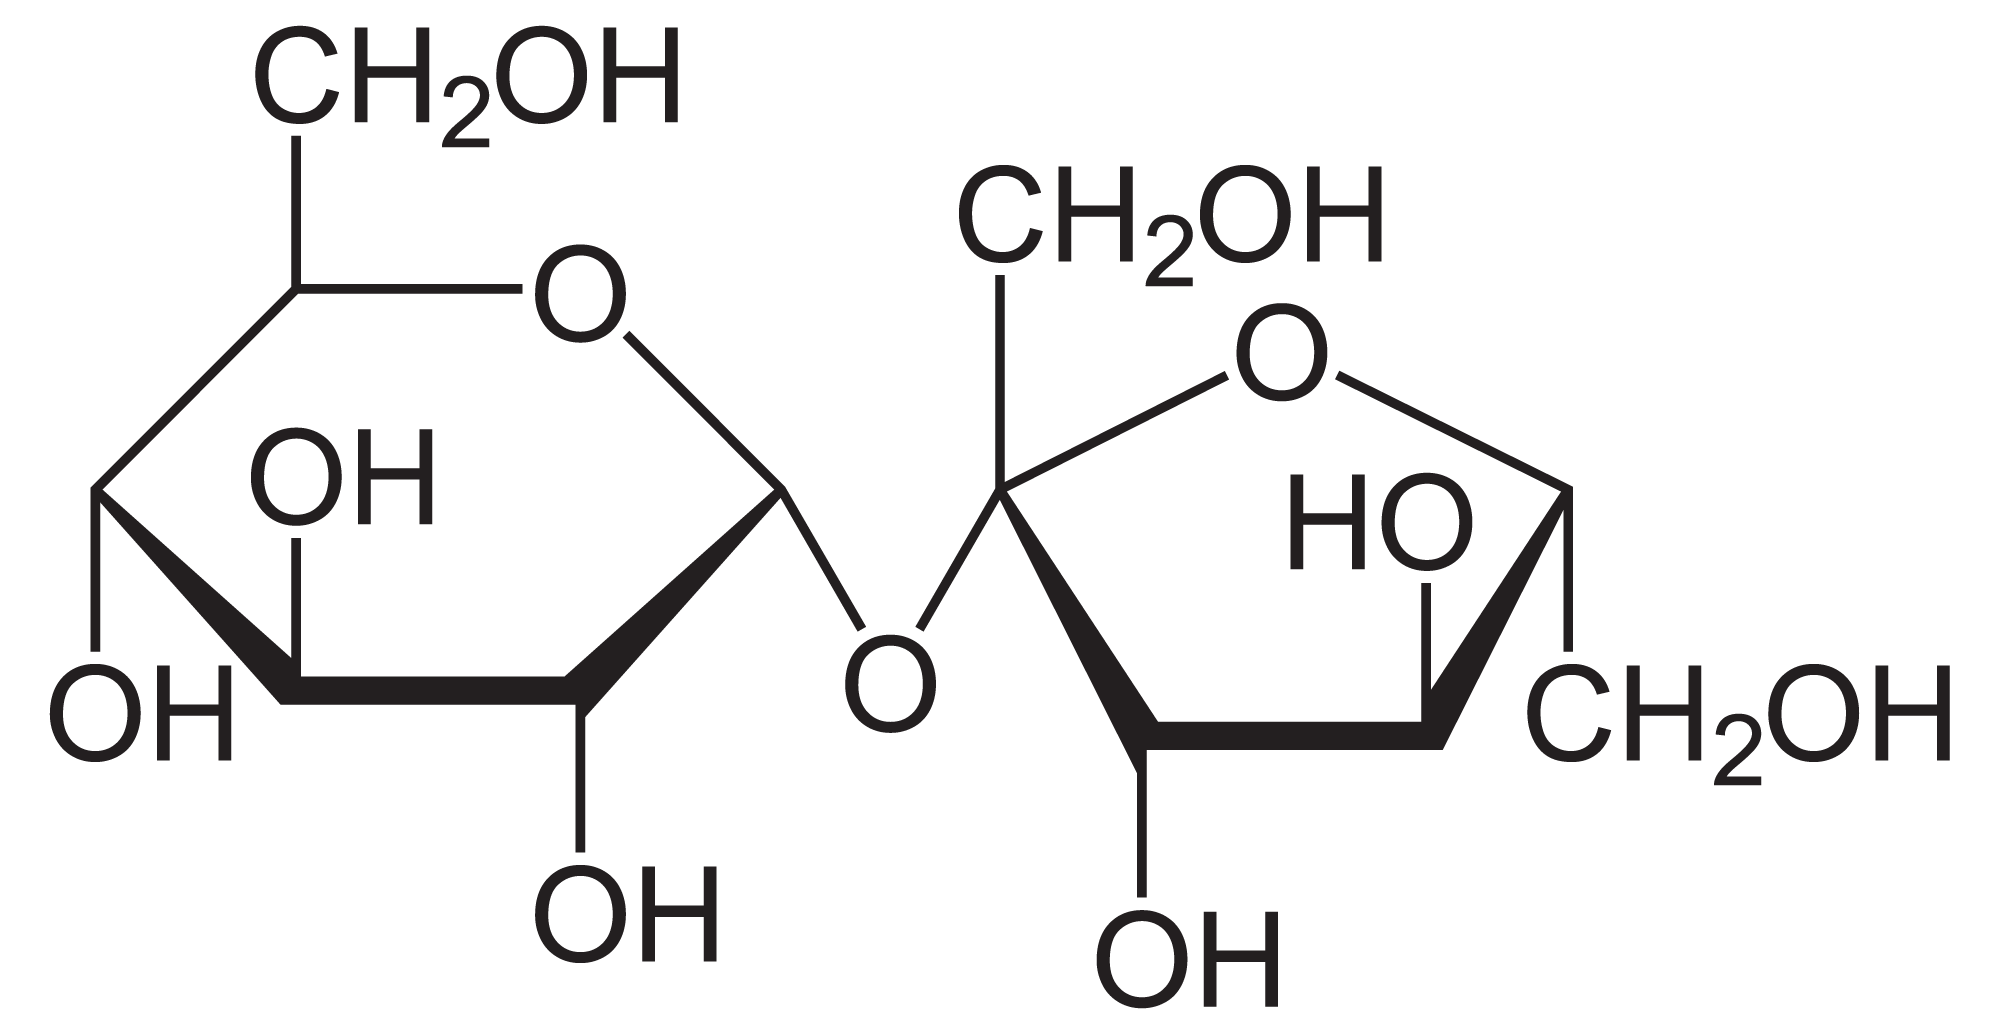 Diagram of a sucrose molecule, showing a hexagonal glucose molecule attached to a pentagonal fructose molecule.